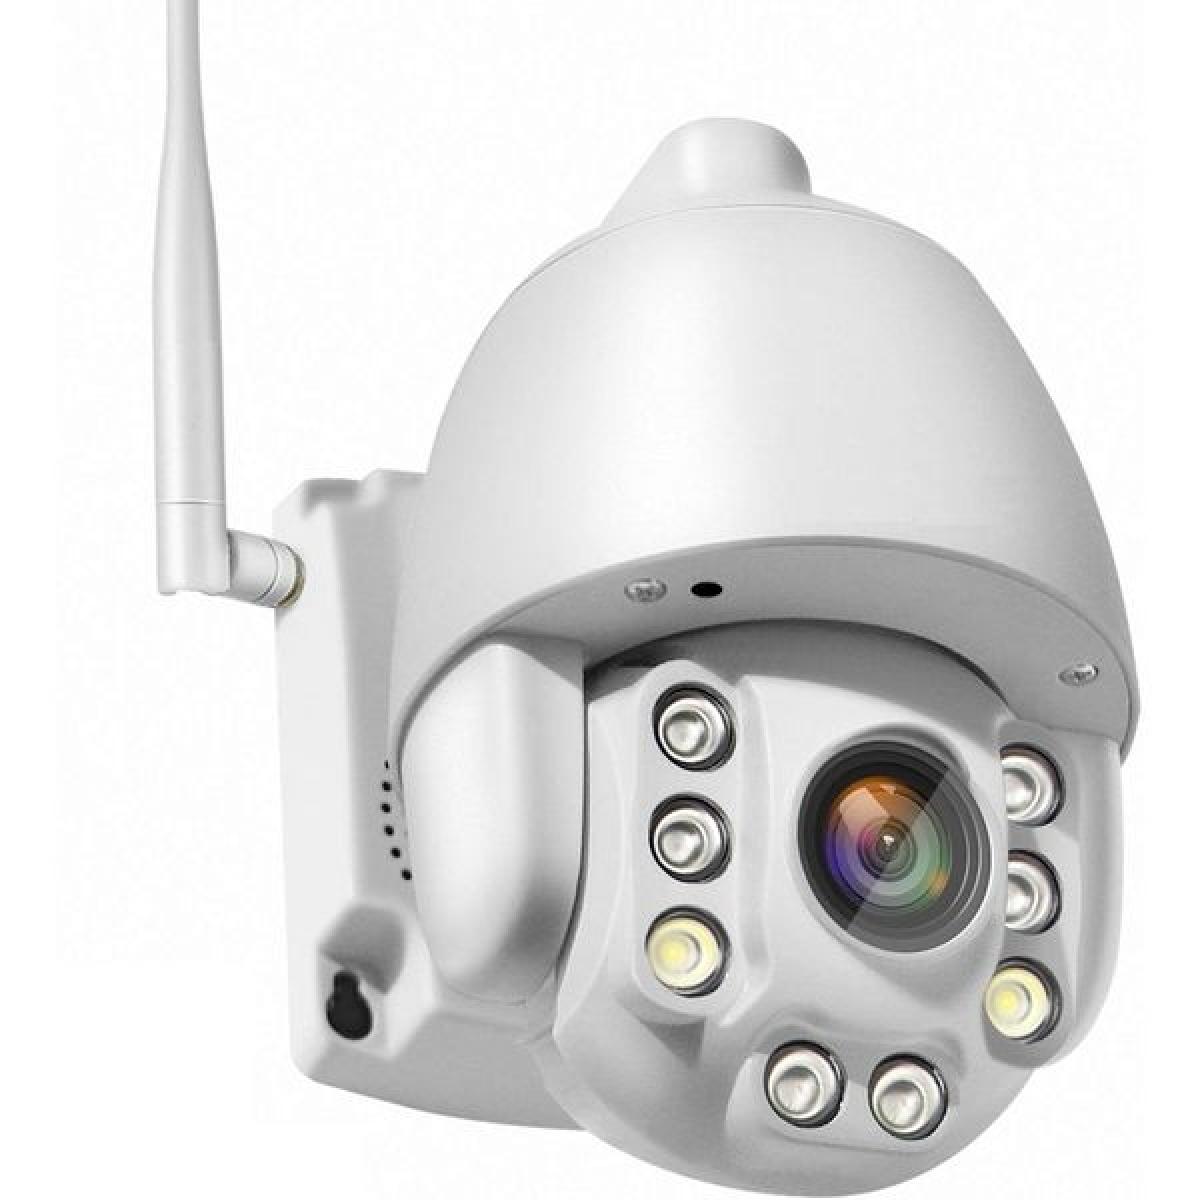 Totalcadeau - Camera de surveillan rotative carte SIM 3G et 4G Zoom X5 IR - Autres accessoires smartphone